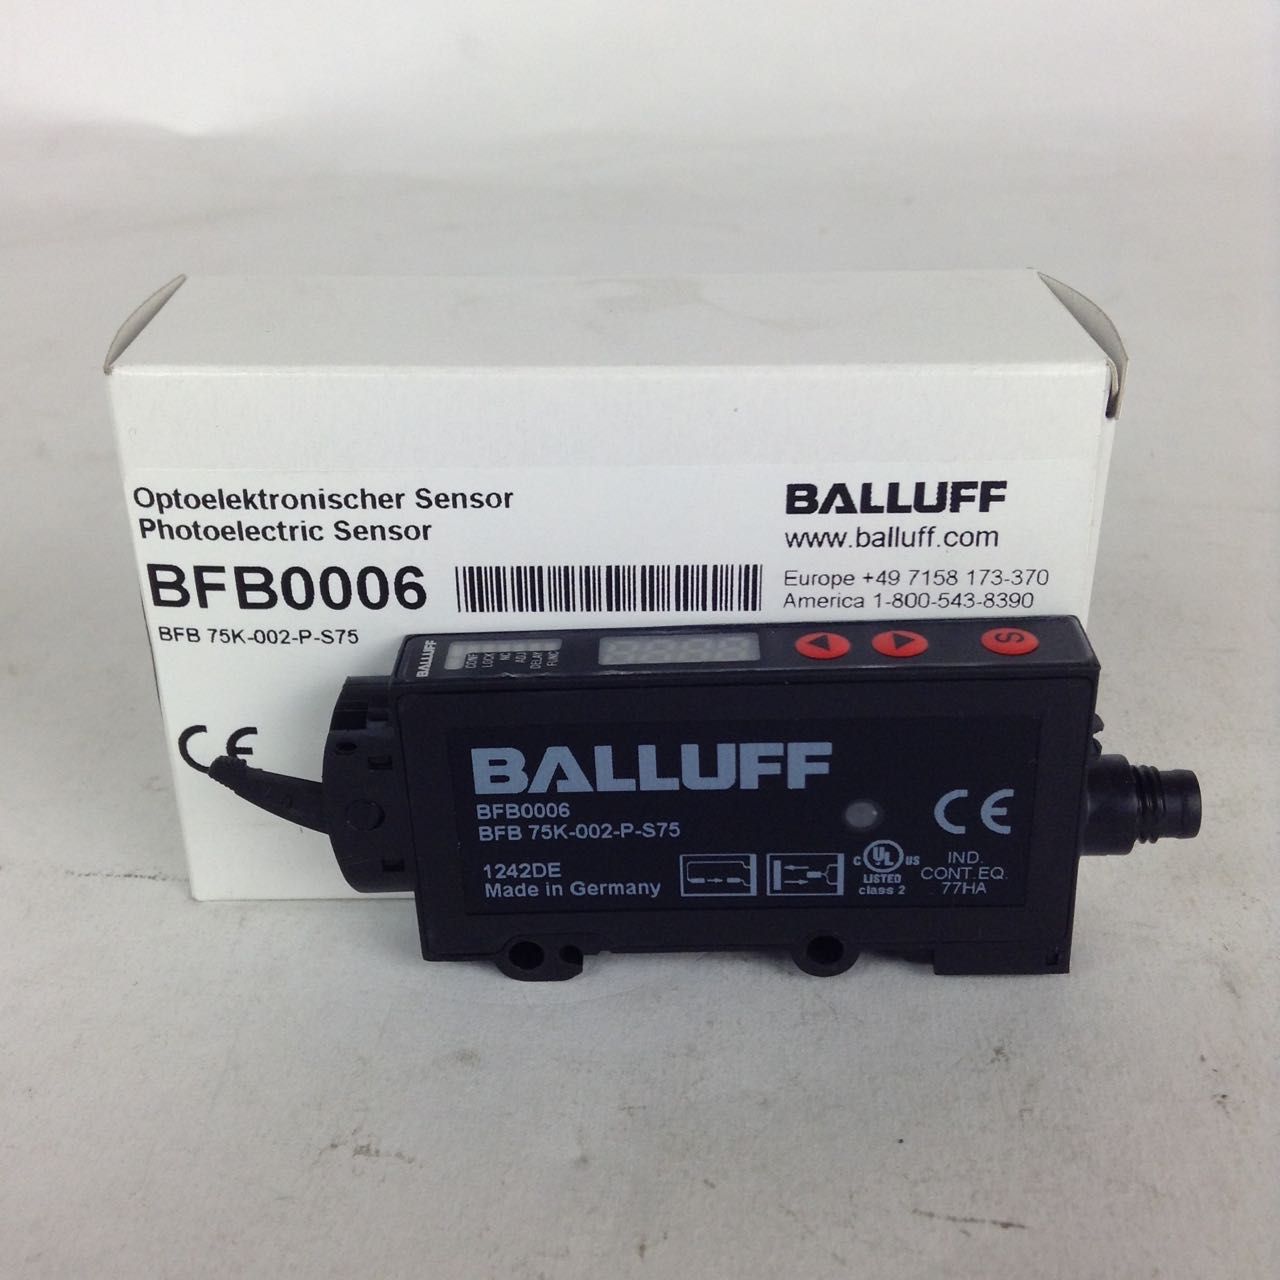 Balluff Bfb0006 Bfb 75k 002 P S75 Fiber Optic Amplifier New